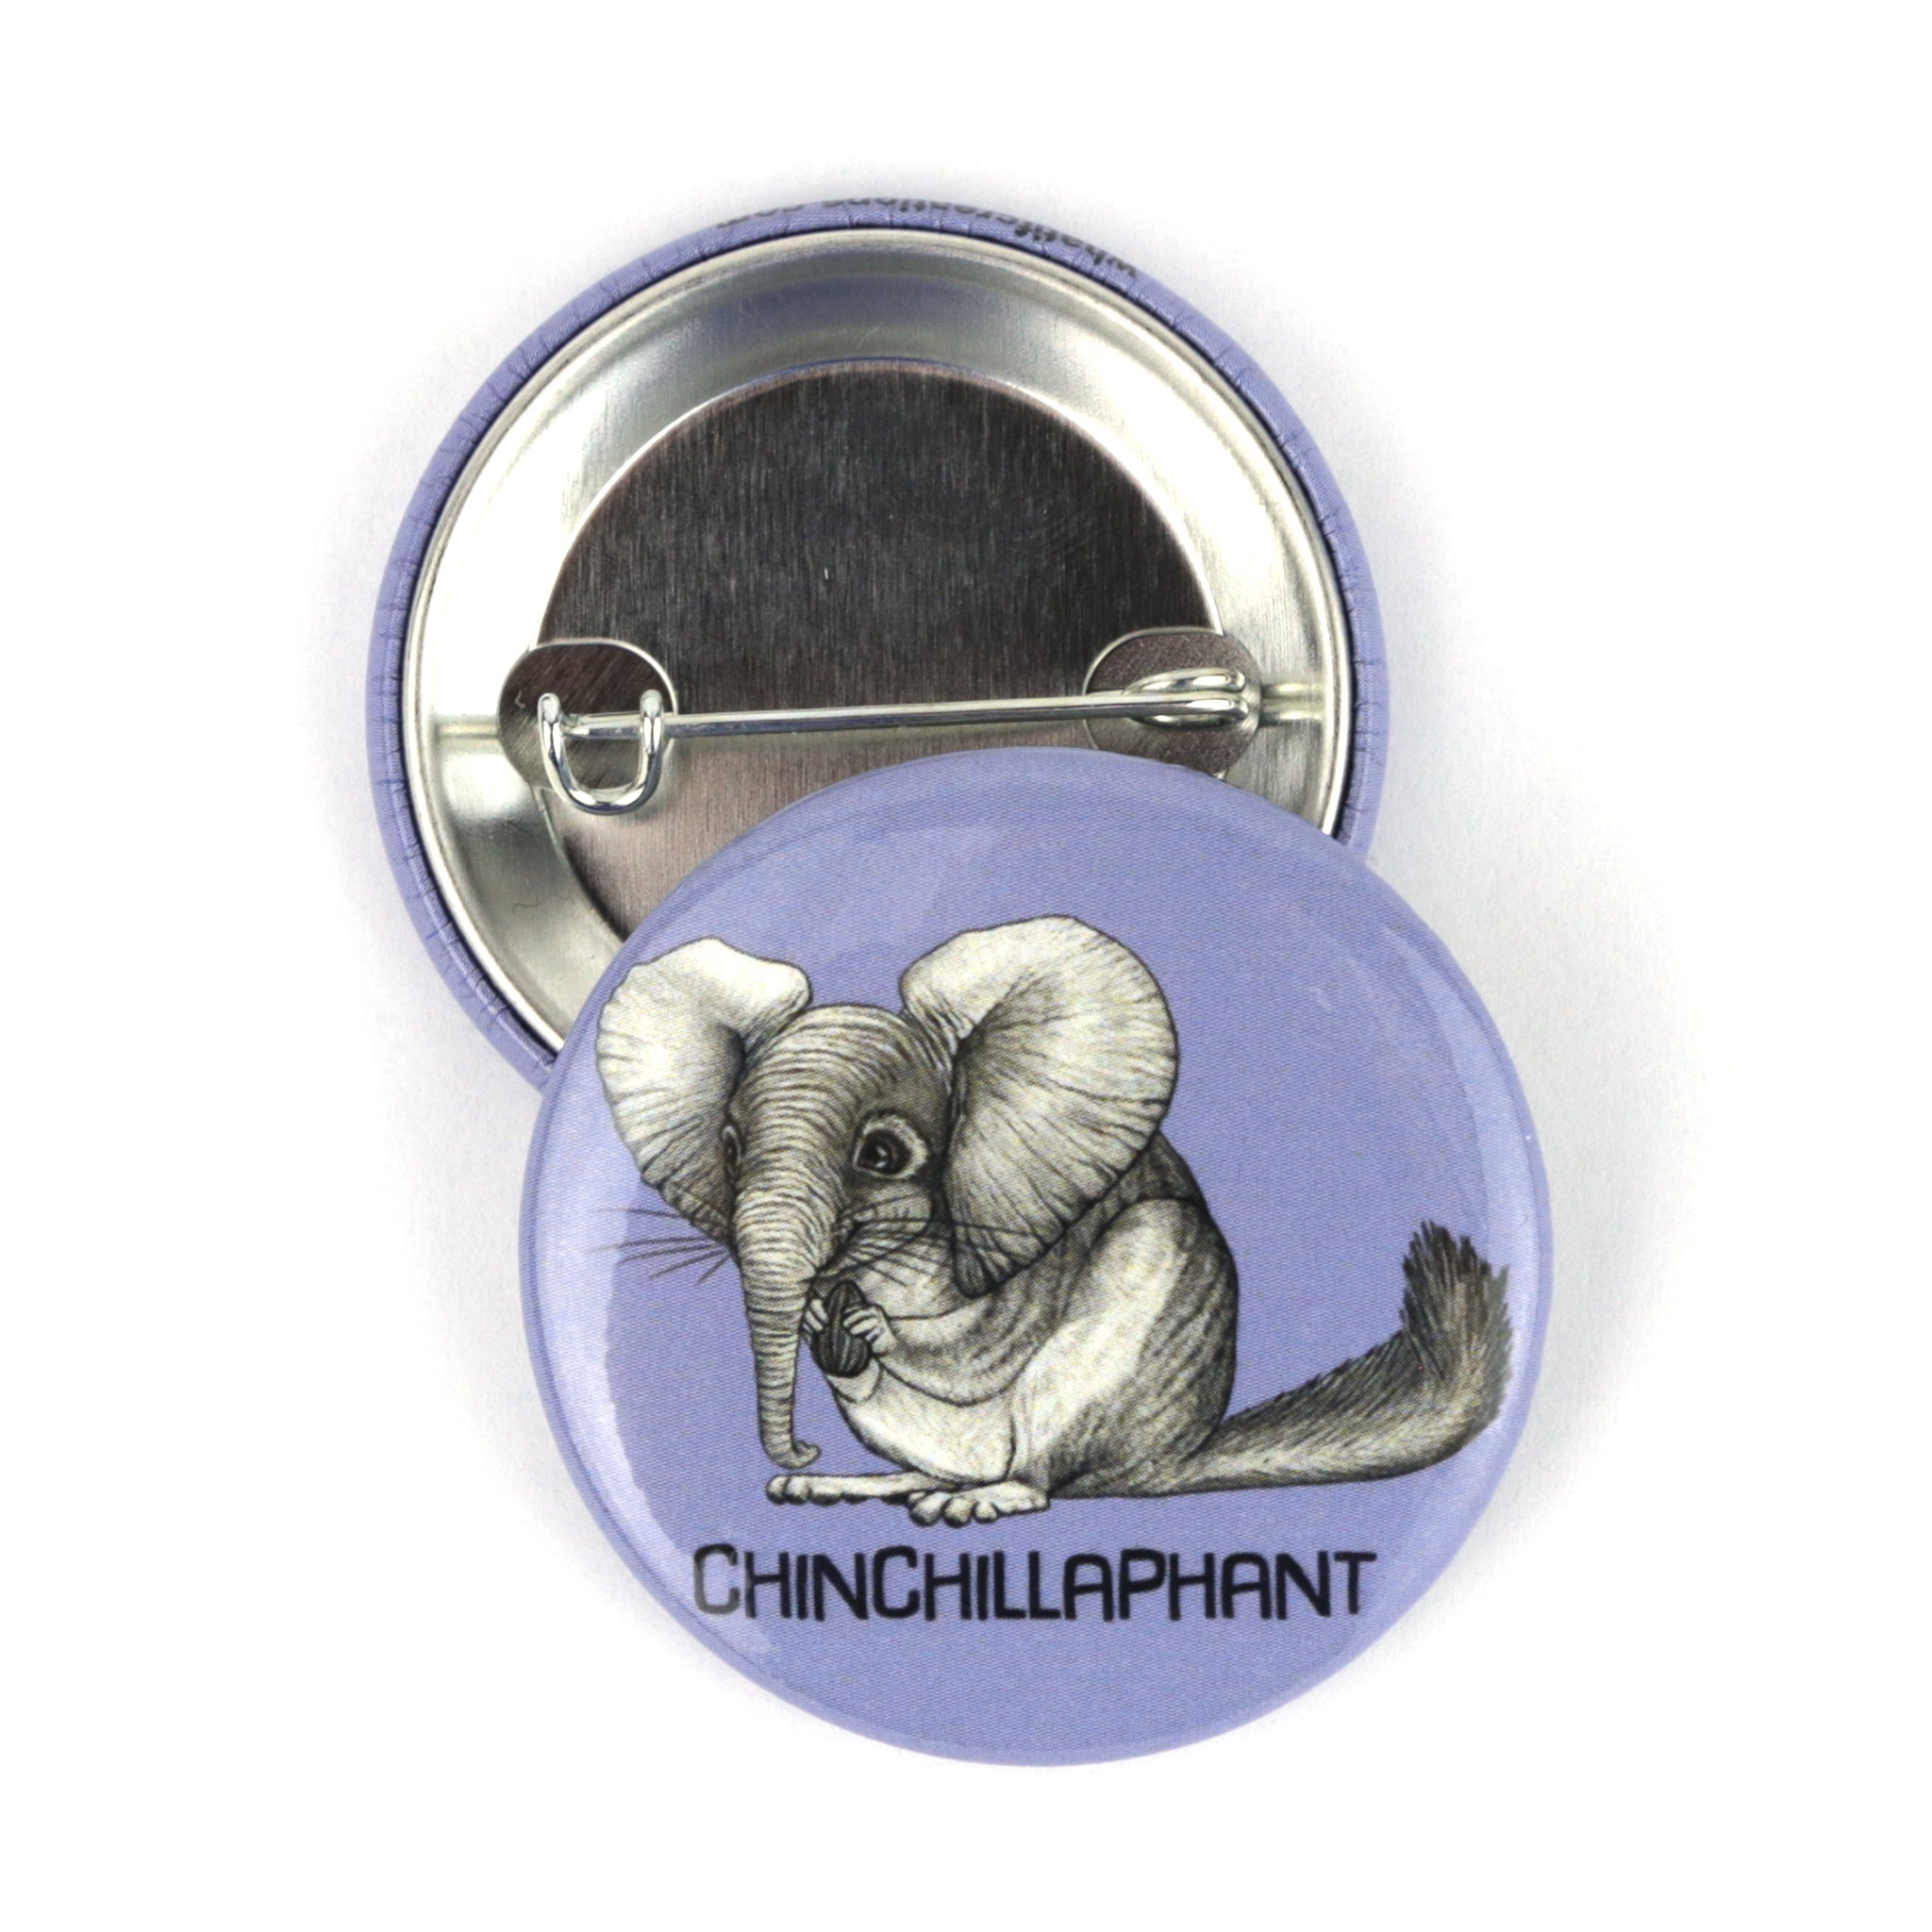 Chinchillaphant | Chinchilla + Elephant Hybrid Animal | 1.5" Pinback Button